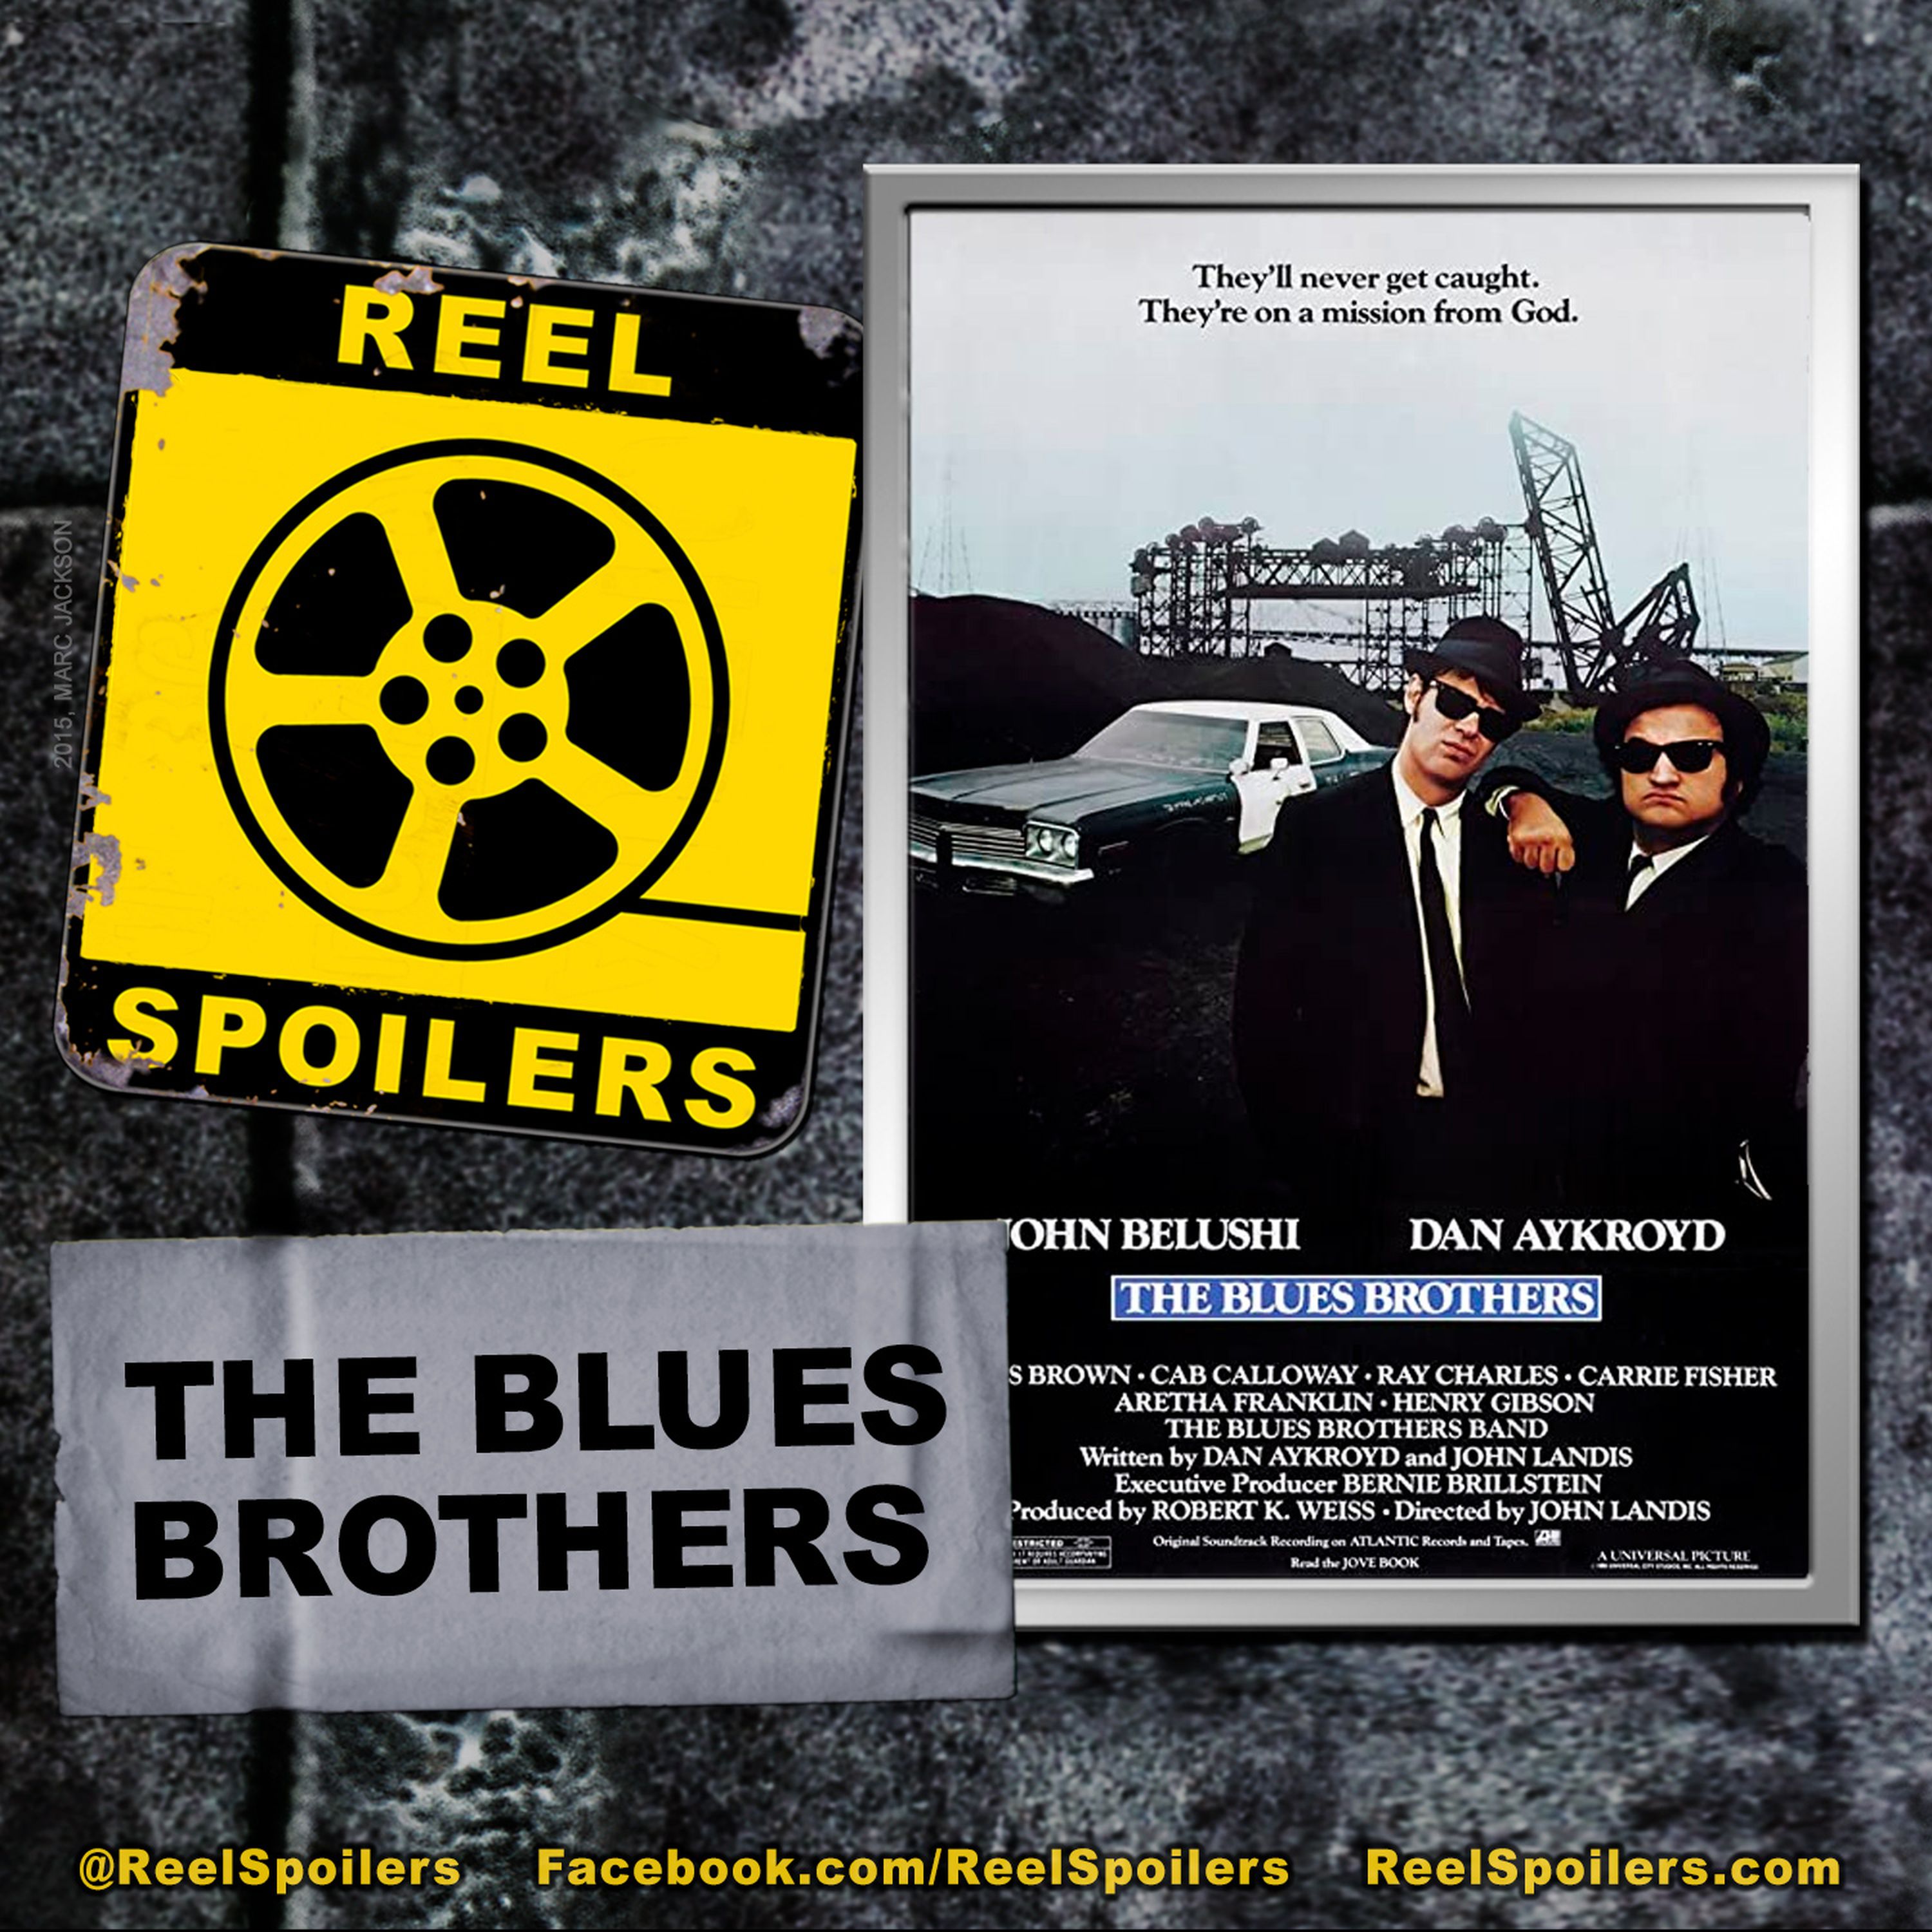 THE BLUES BROTHERS Starring John Belushi, Dan Aykroyd Image